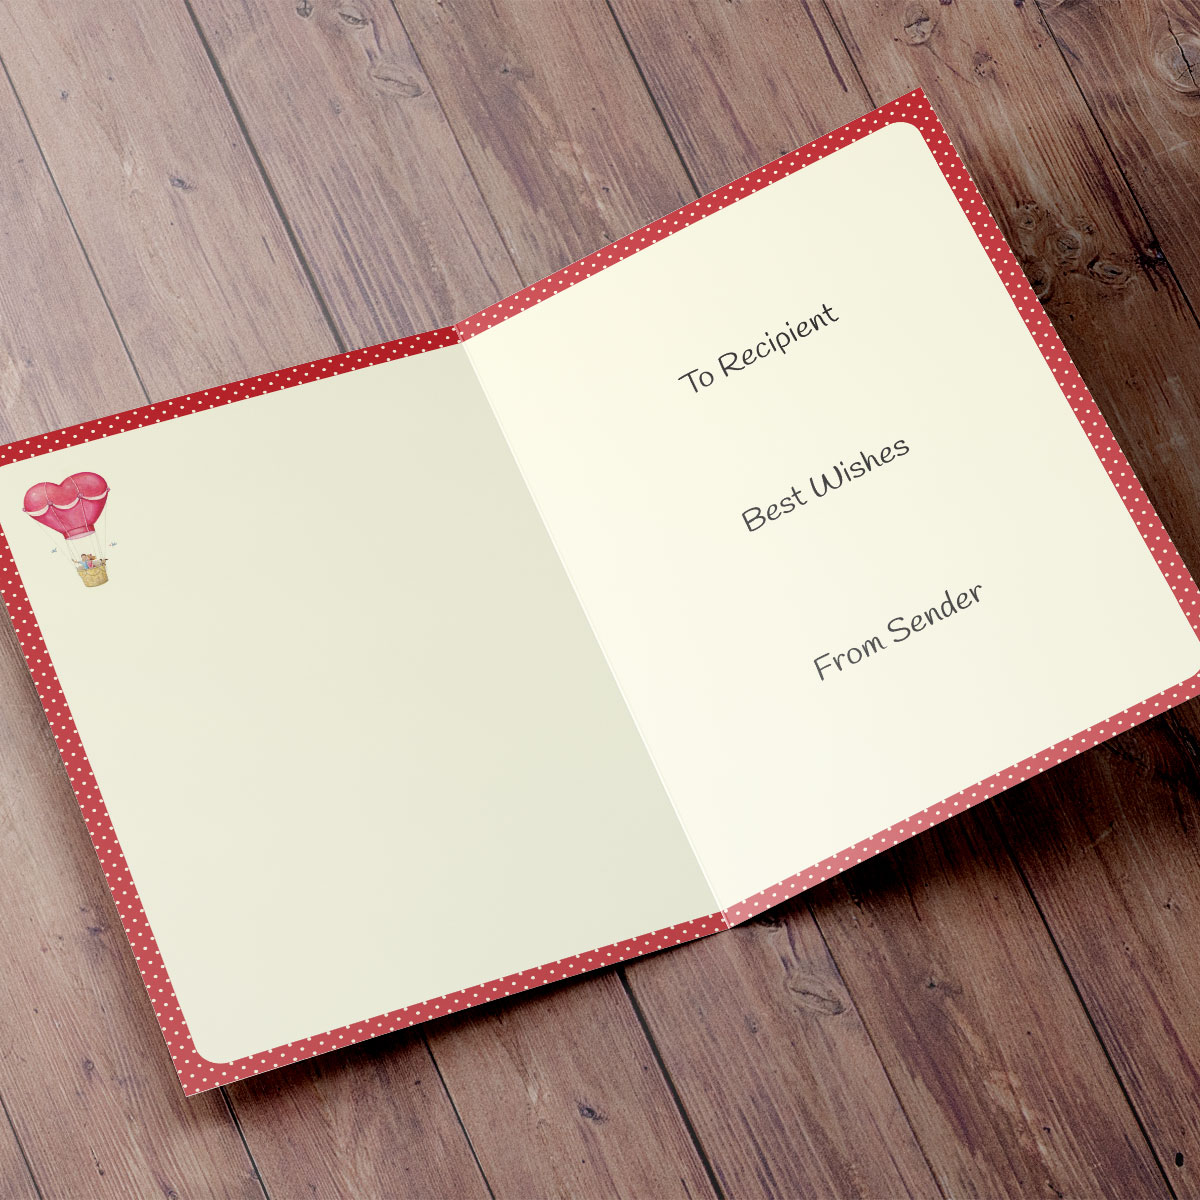 Personalised Valentine's Card - Makes My Heart Soar Boyfriend